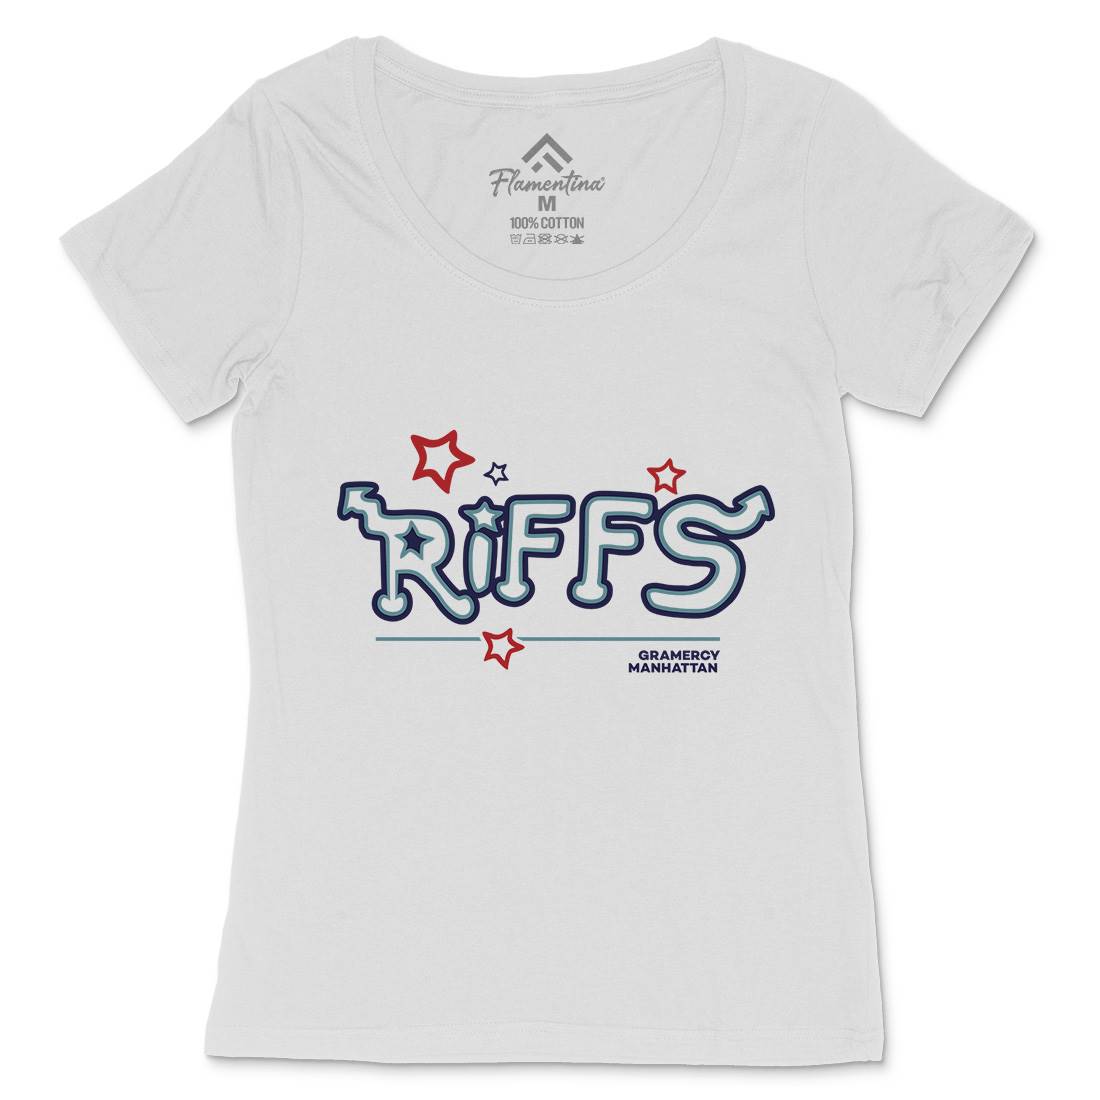 Riffs Womens Scoop Neck T-Shirt Retro D290